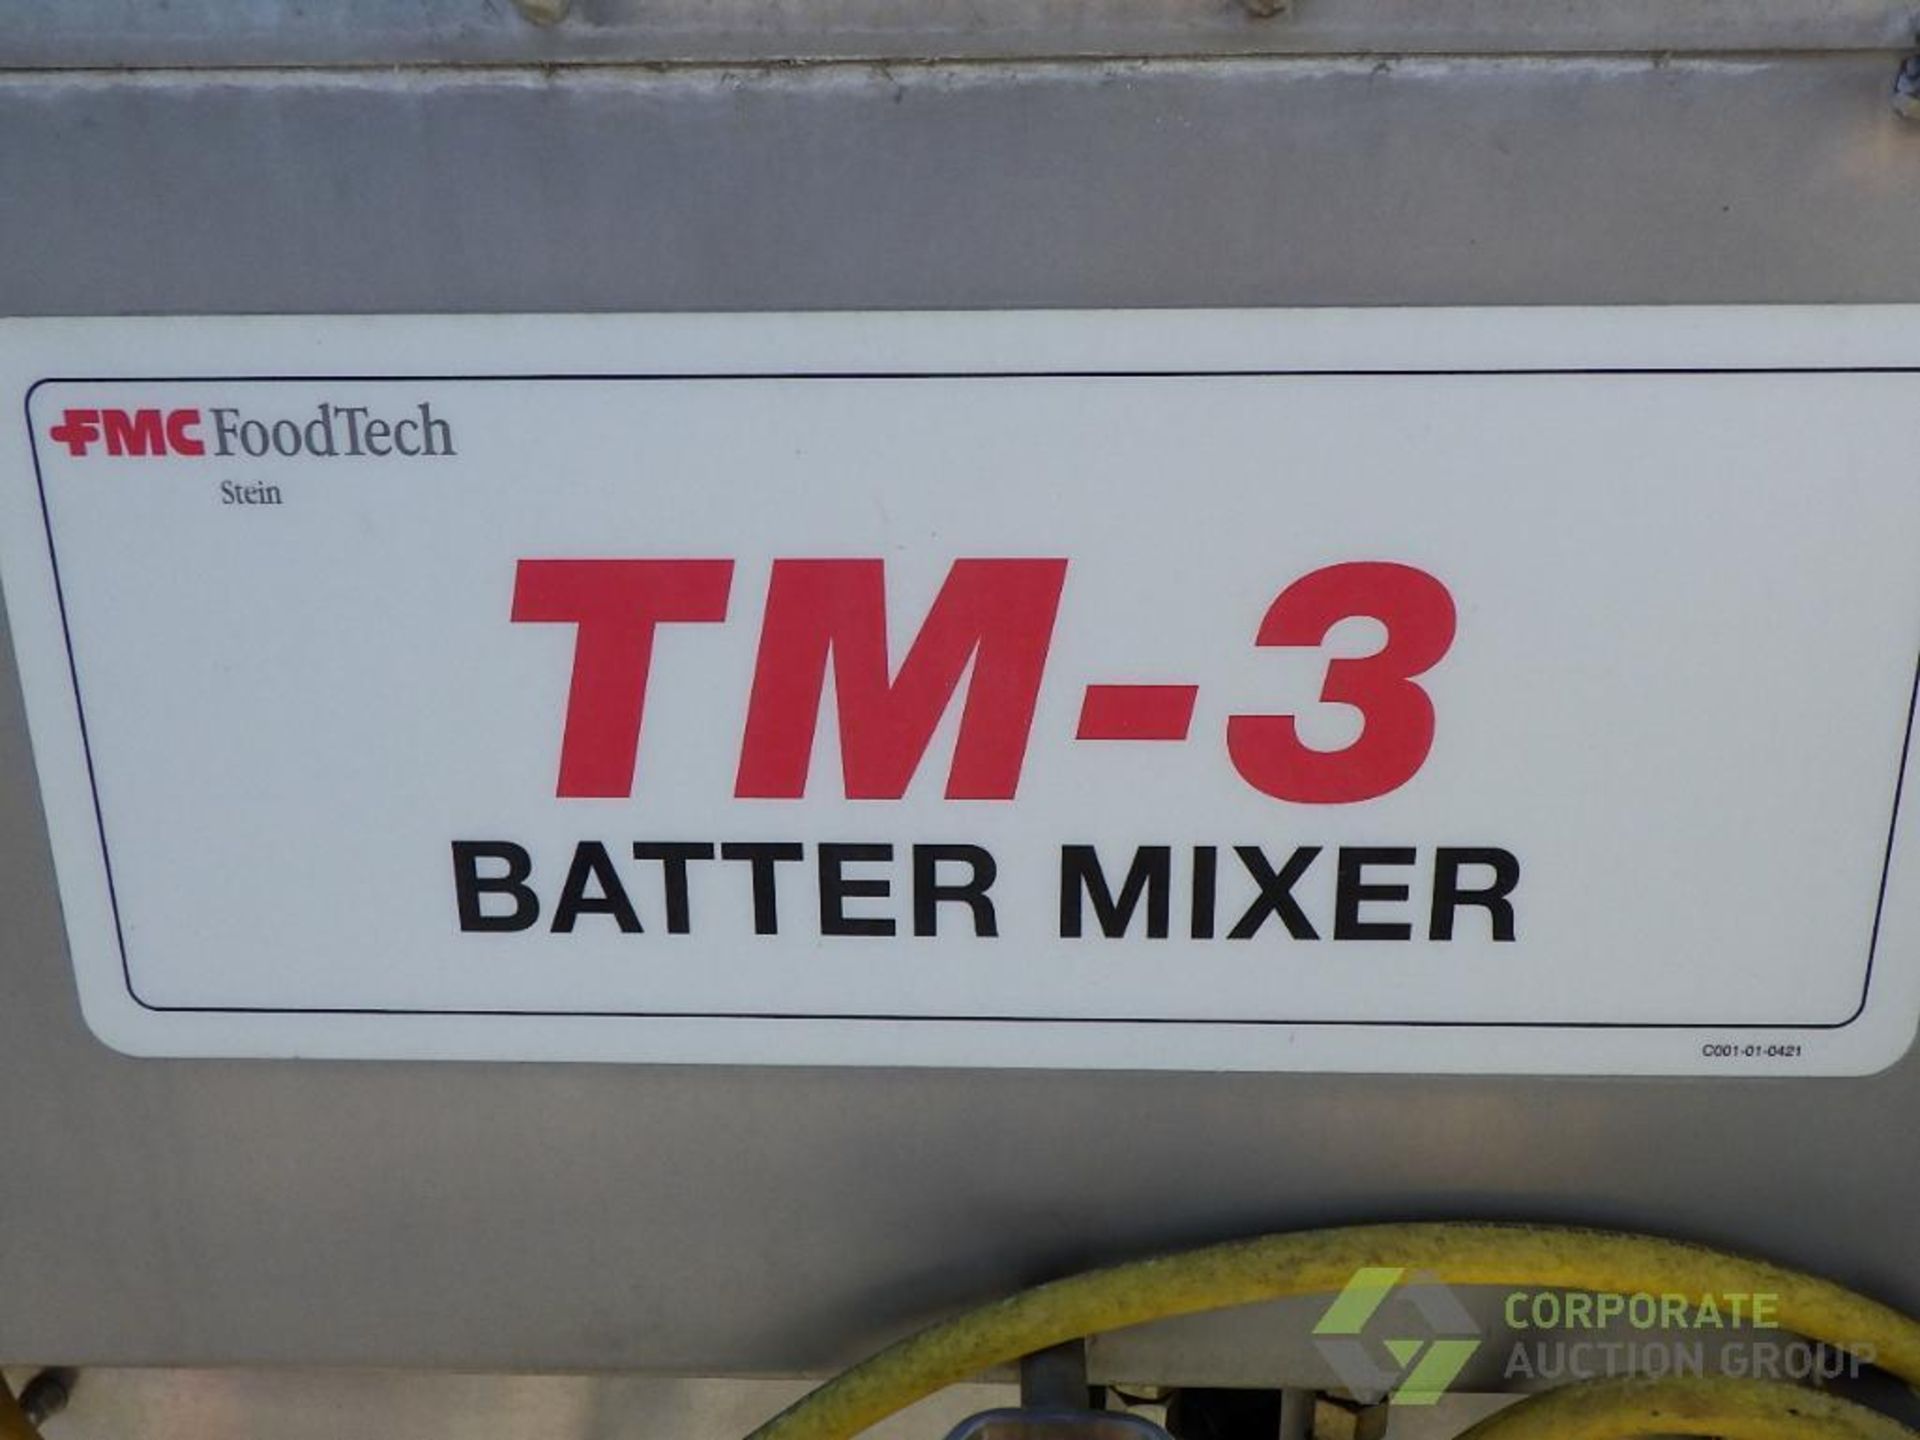 2002 FMC Foodtech batter mixer - Image 27 of 31